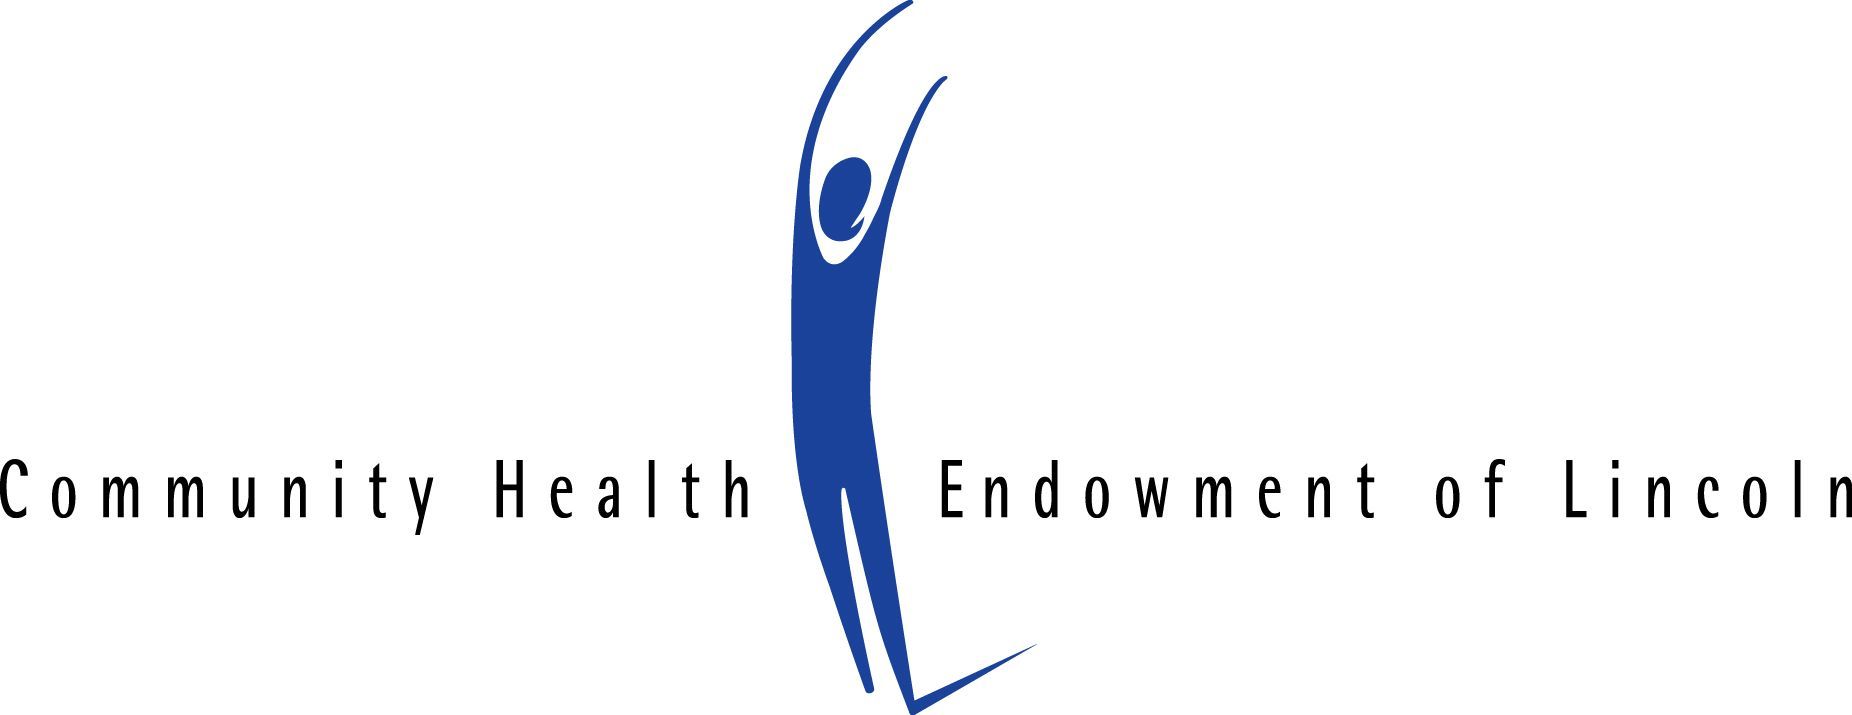 Community Health Endowment